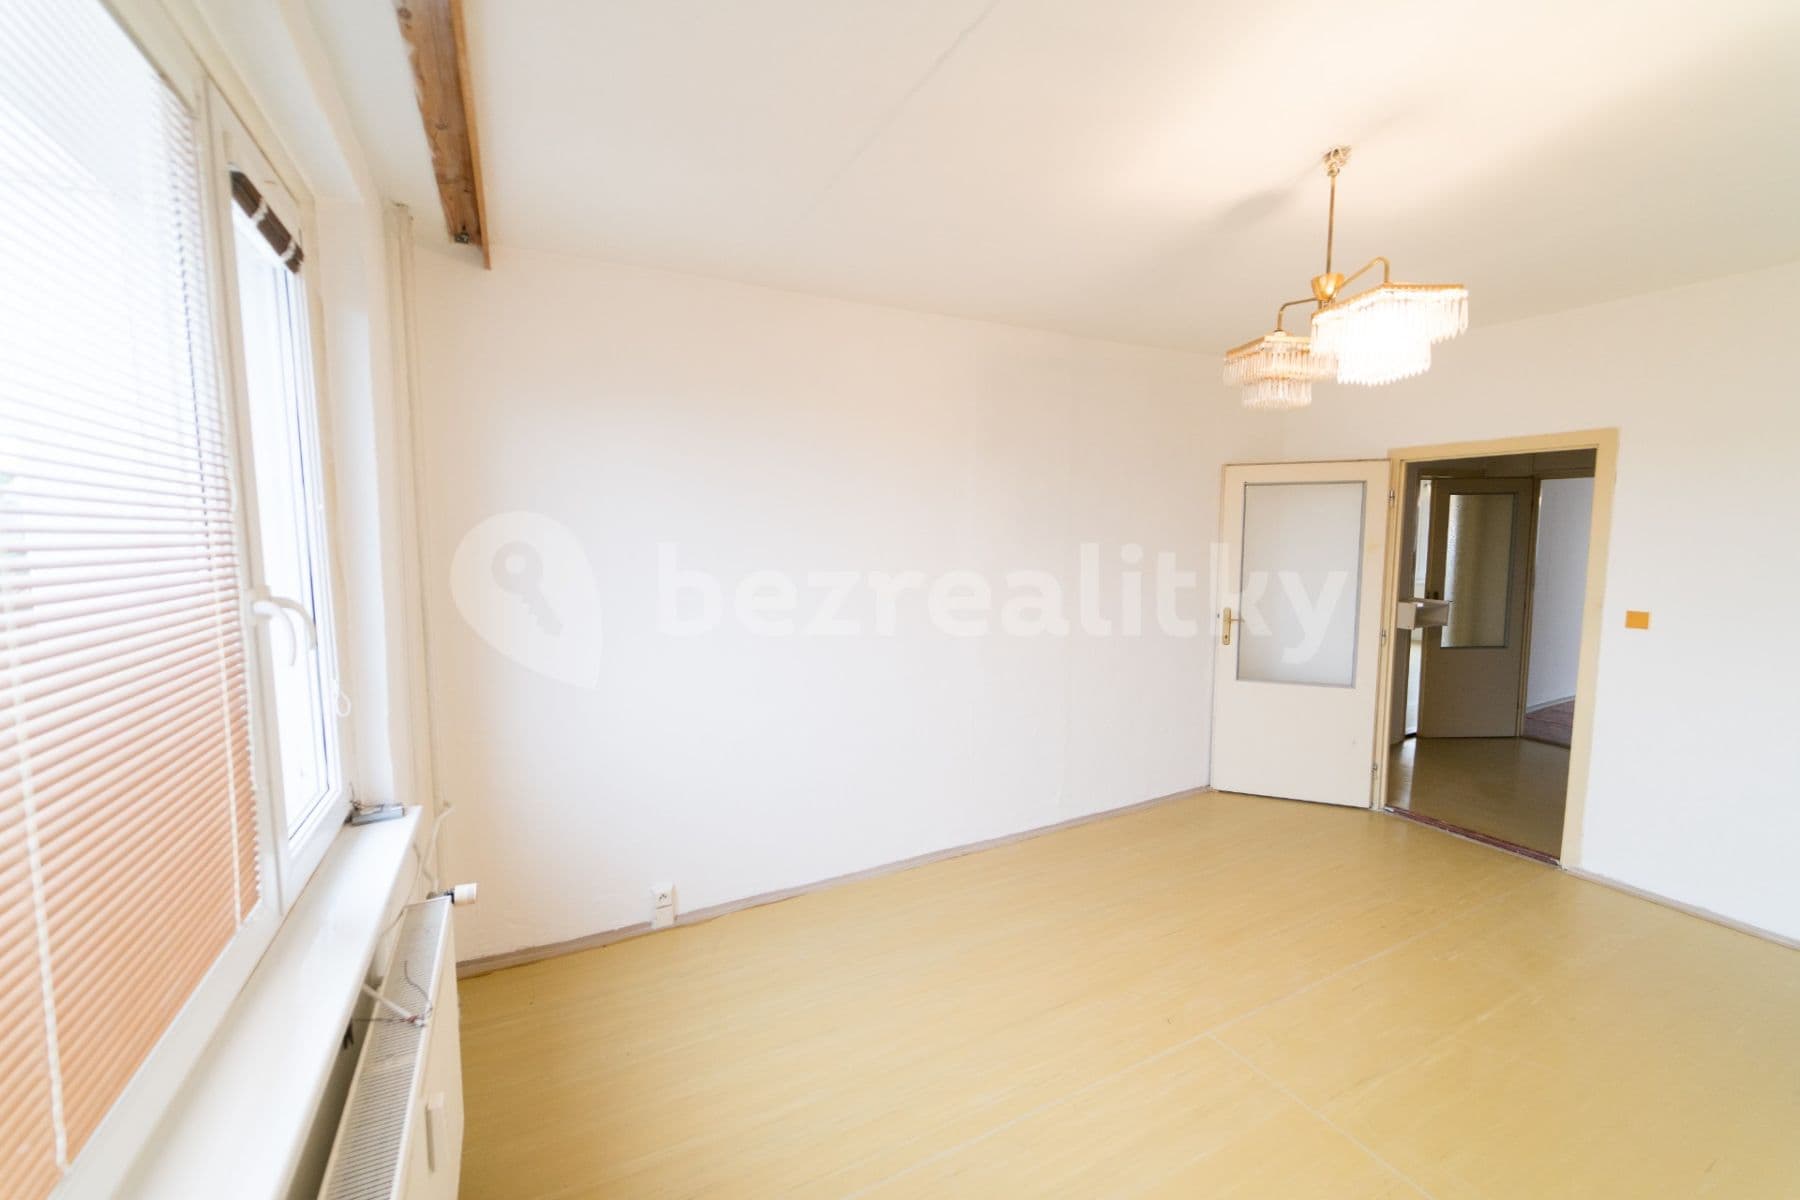 3 bedroom flat for sale, 80 m², Fleischnerova, Brno, Jihomoravský Region